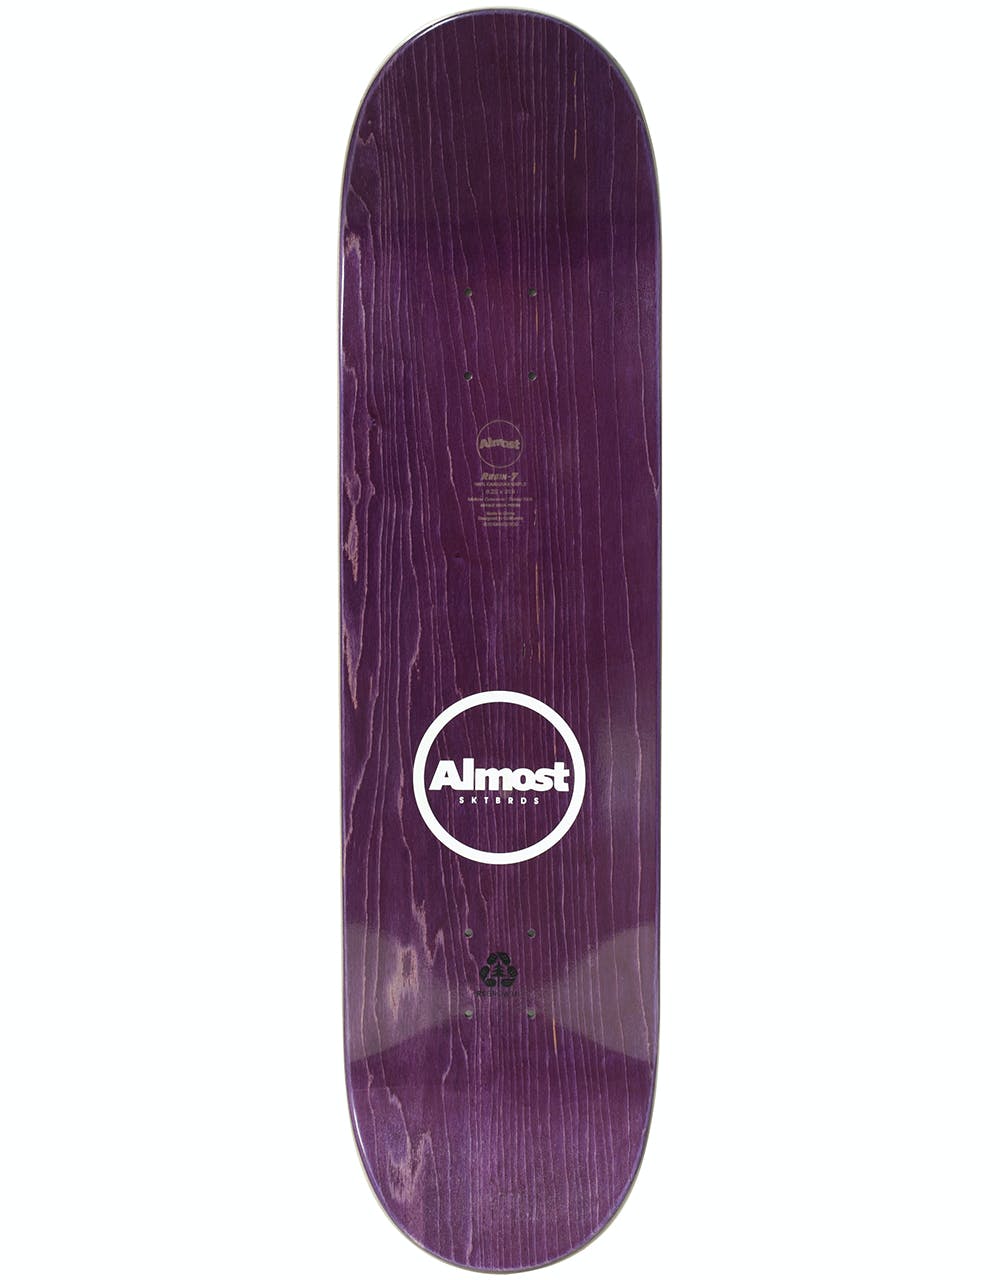 Almost Mullen Cut & Paste R7 Skateboard Deck - 7.75"